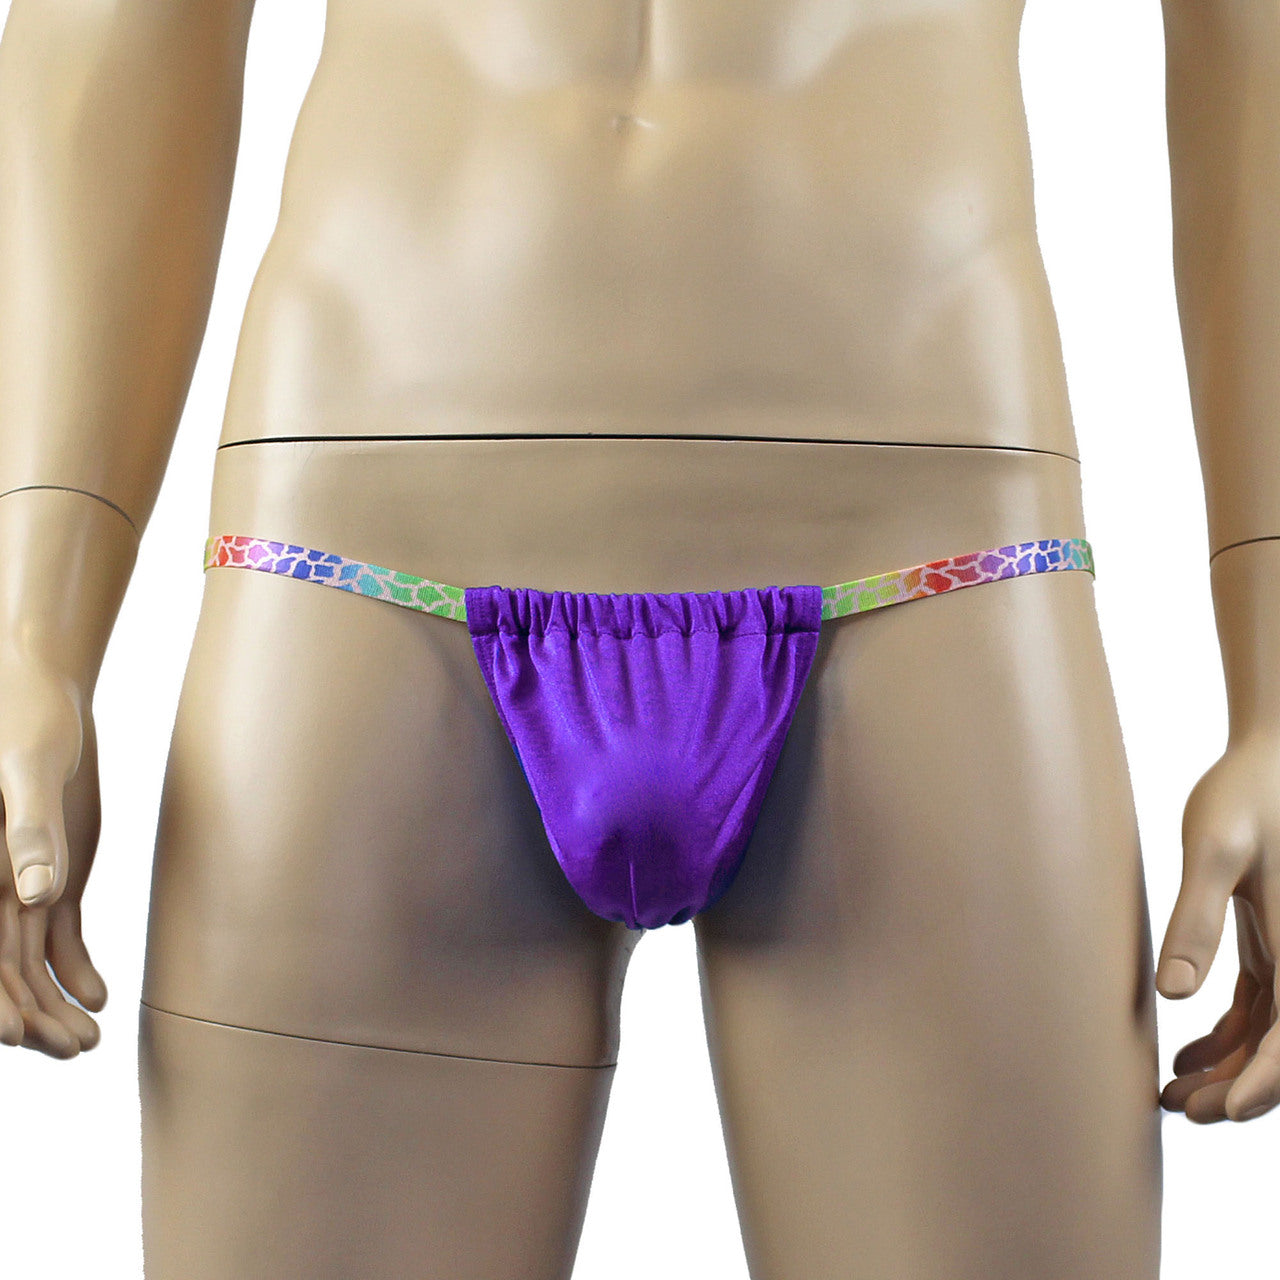 Mens Wild Colourful Adjustable Ball Bag Pouch G string Underwear Purple